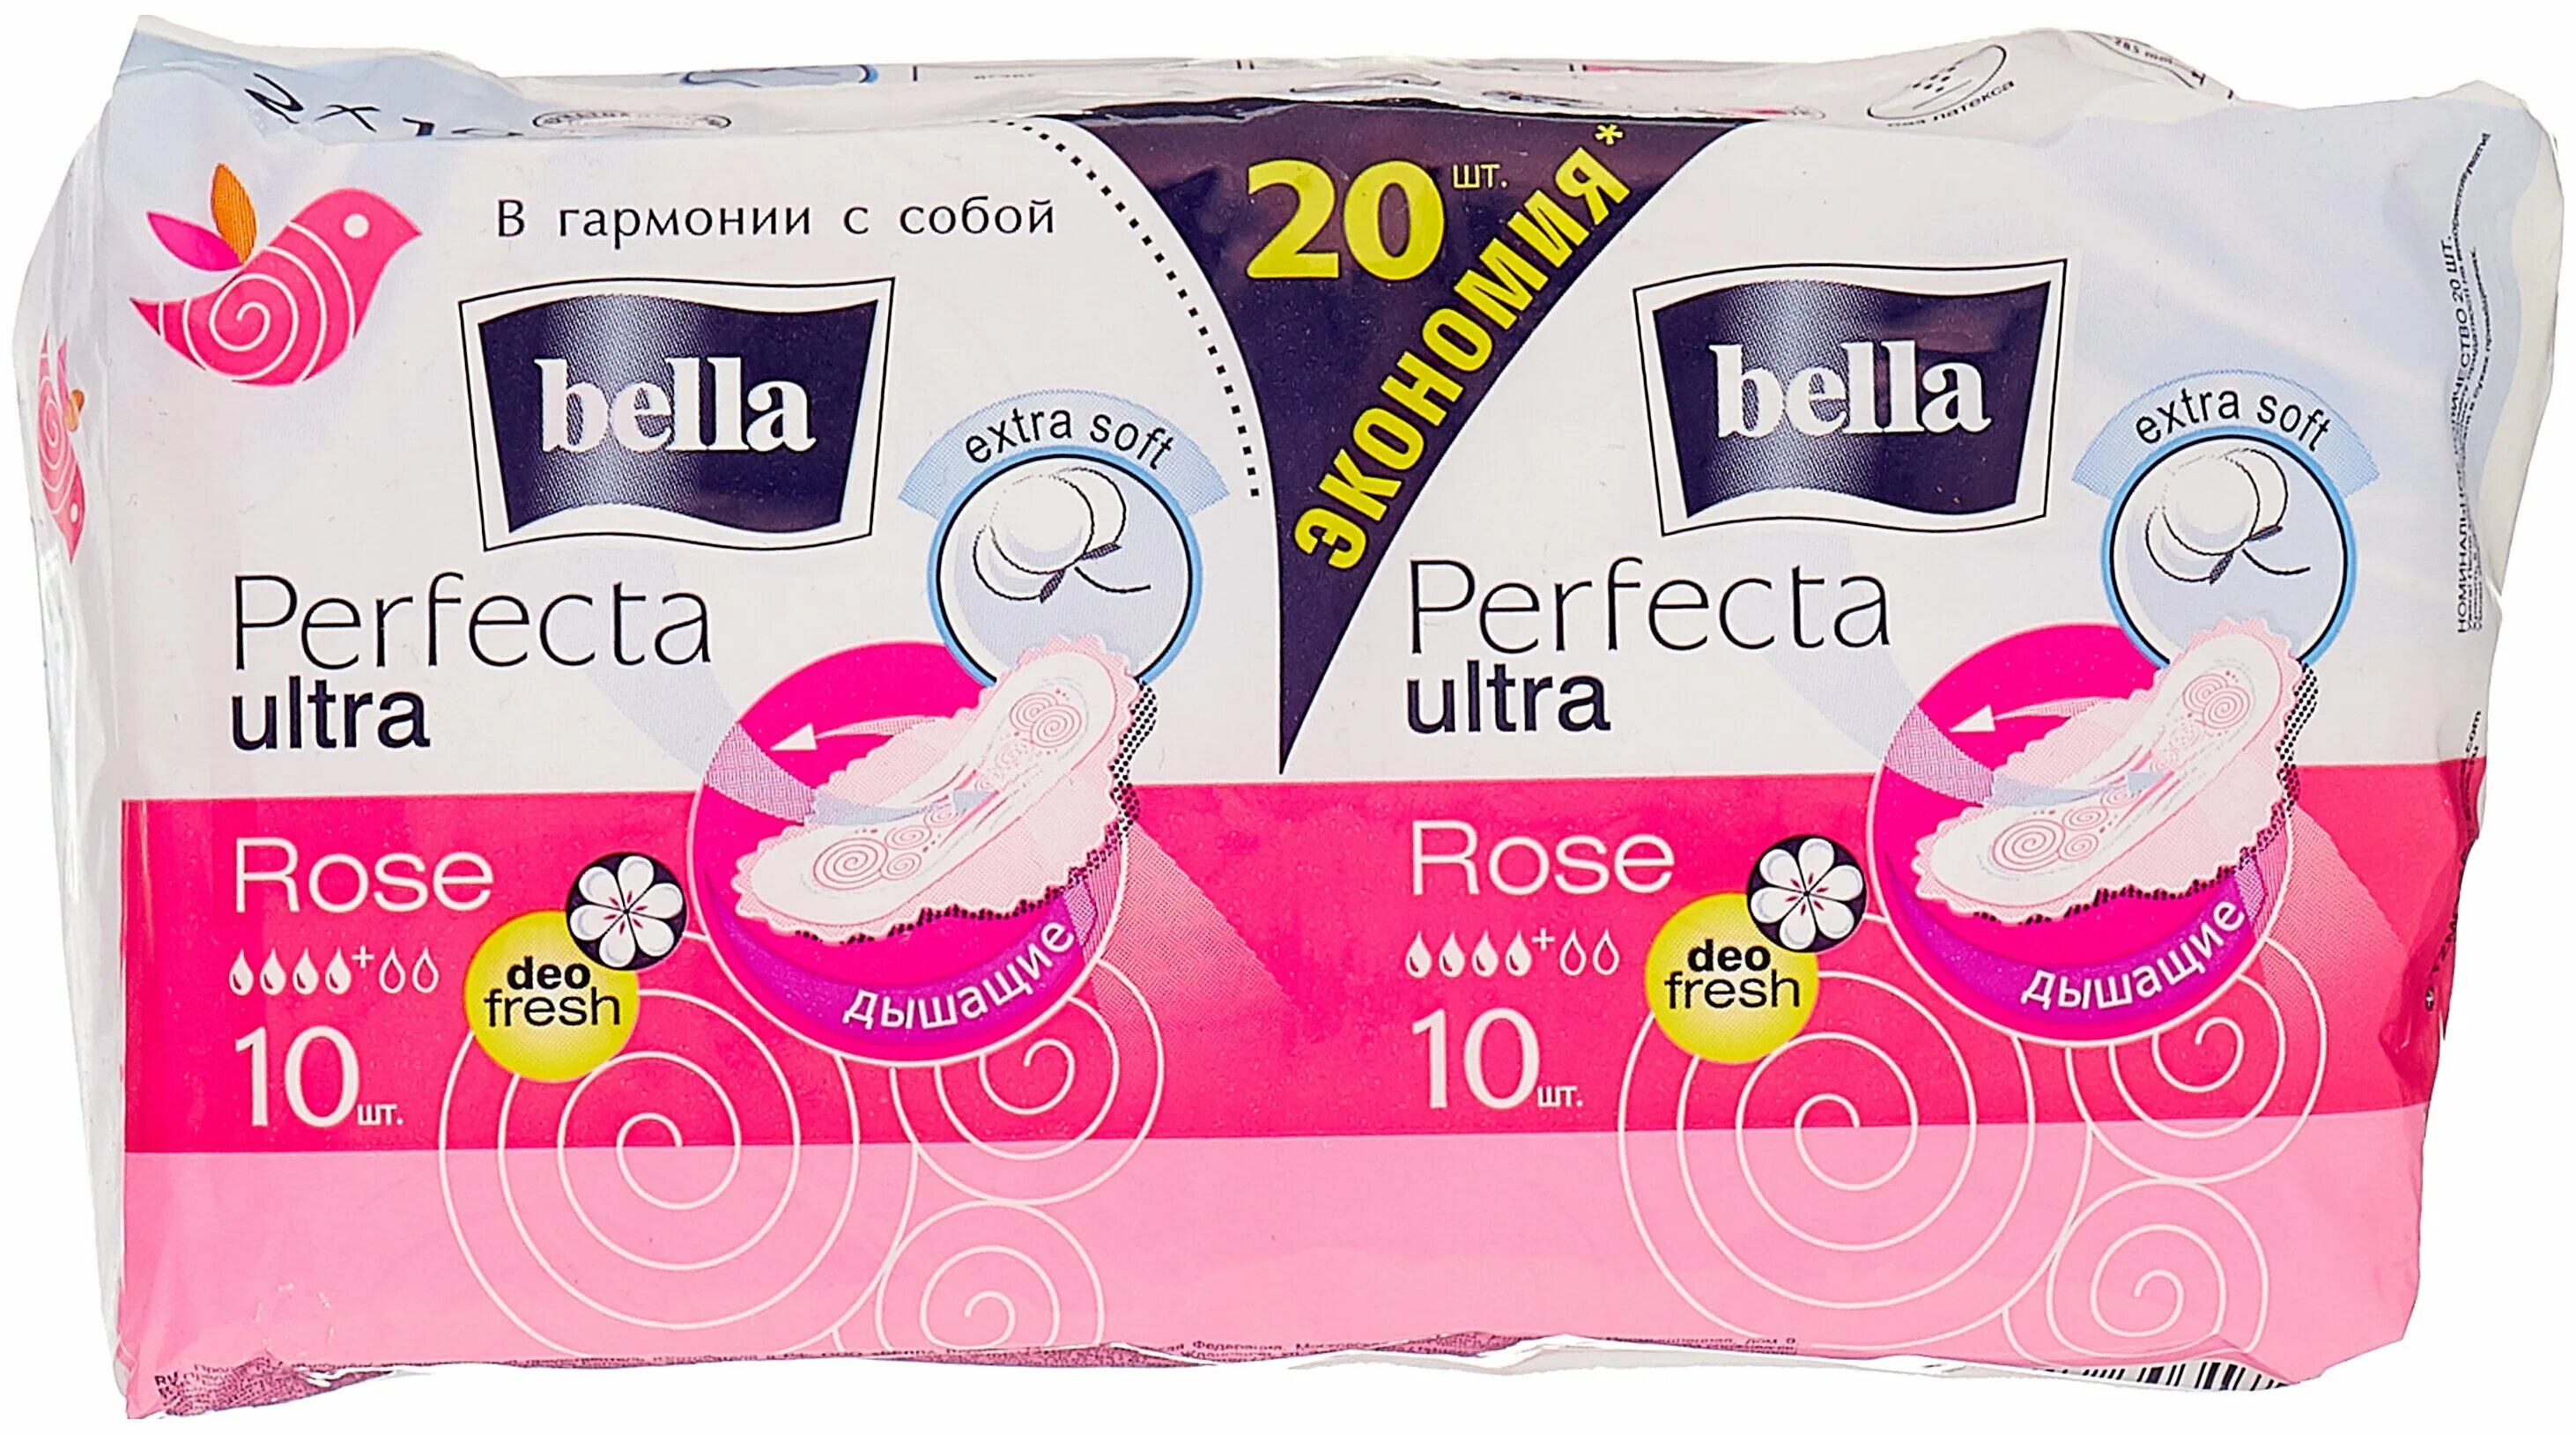 Прокладки bella maxi. Прокладки perfecta Ultra. Прокладки Bella perfecta Ultra. Bella прокладки супертонкие perfecta Ultra Rose deo, 10ш.